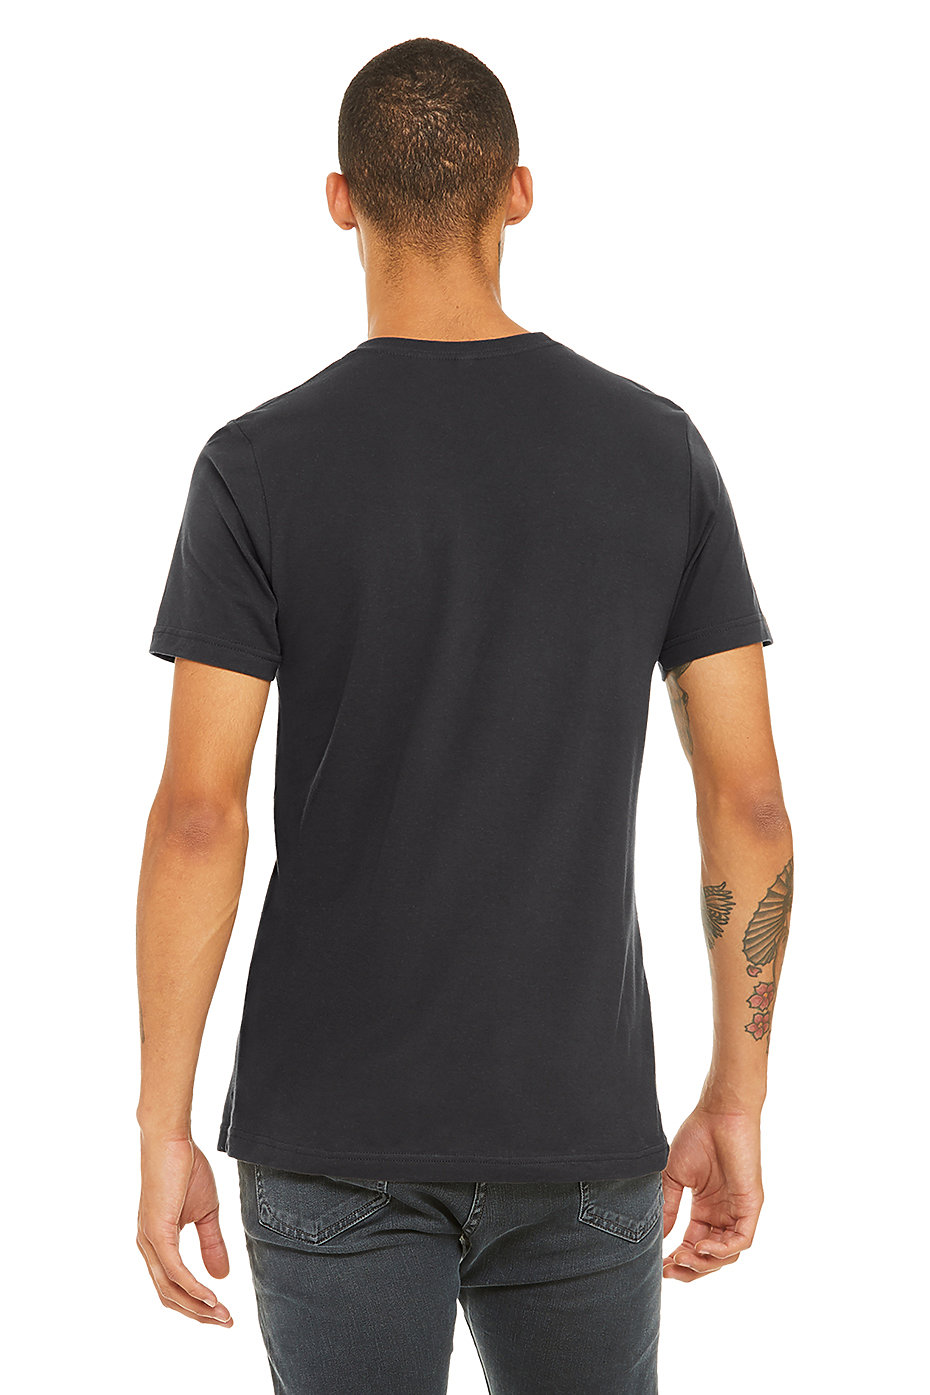 Unisex Jersey Short Sleeve Tee | Jersey T Shirt | Wholesale Blank T ...